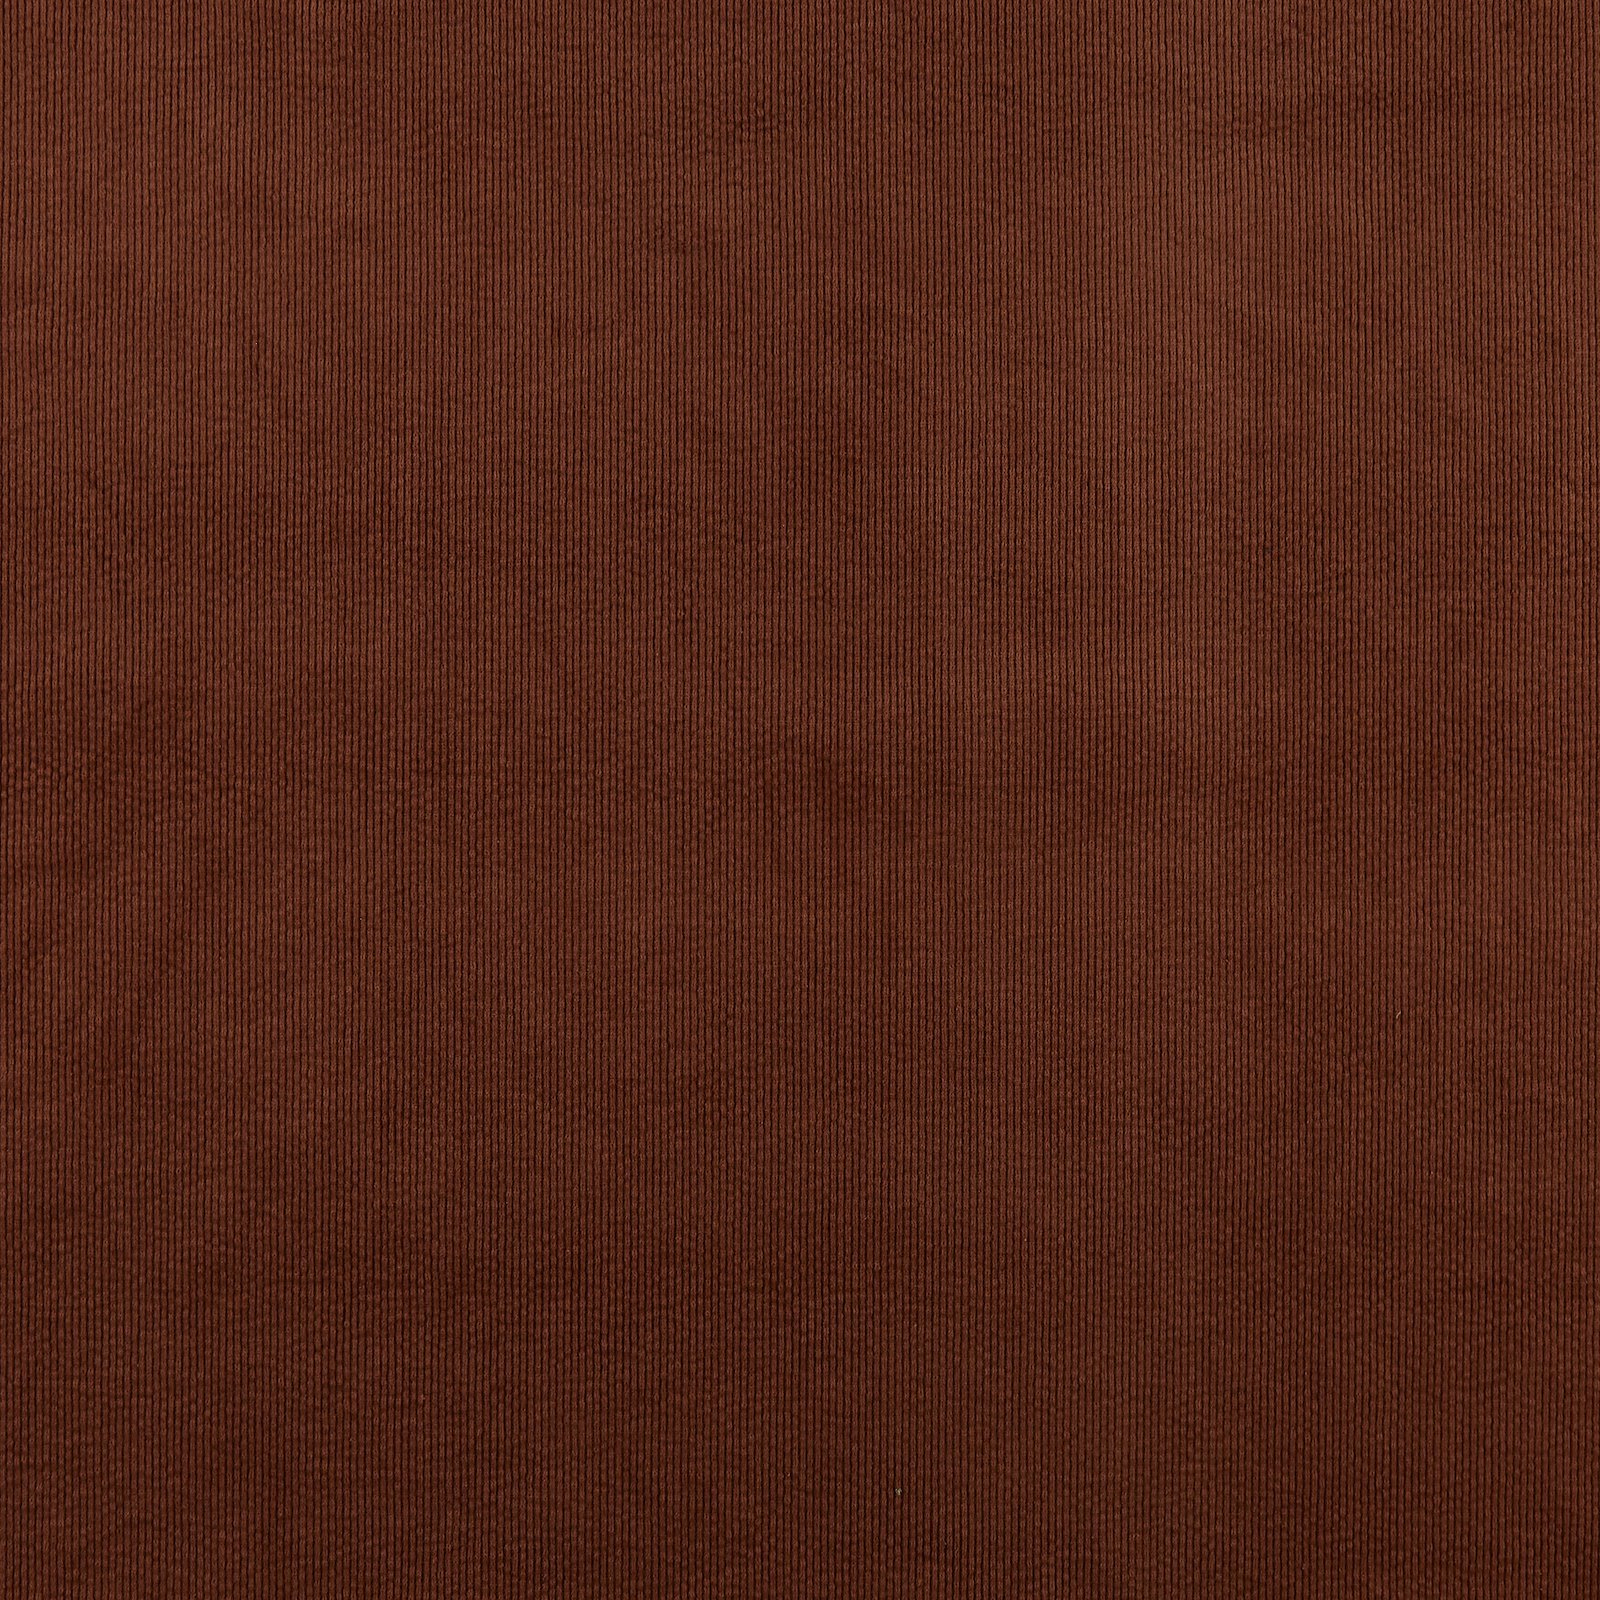 Corduroy 6 wales w str chocolate brown 430851_pack_solid